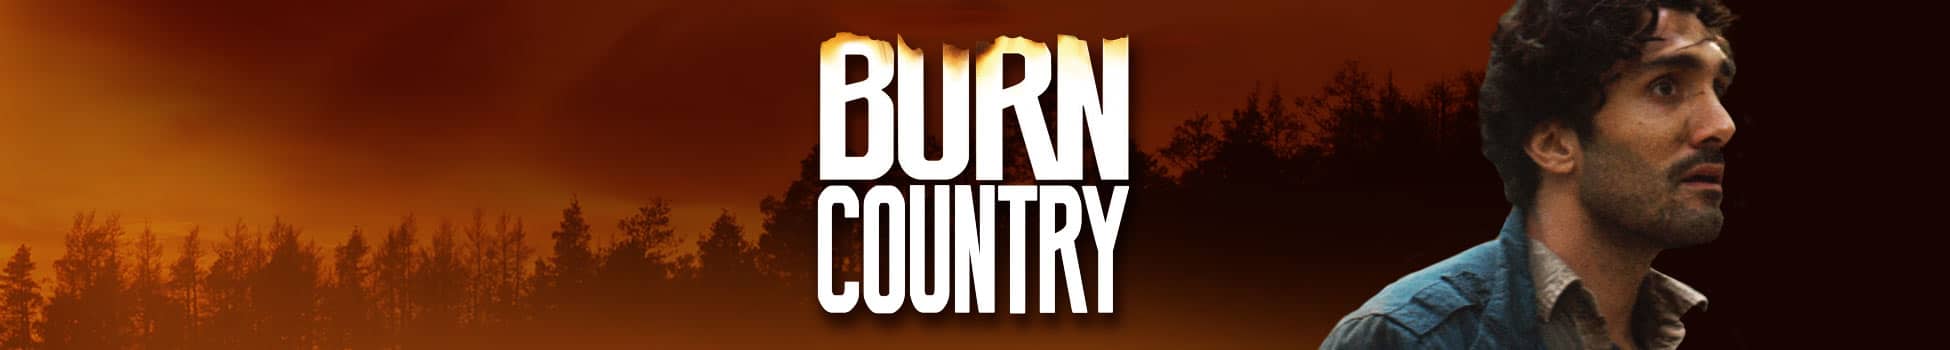 Burn Country - Artwork - Key Visual - Header